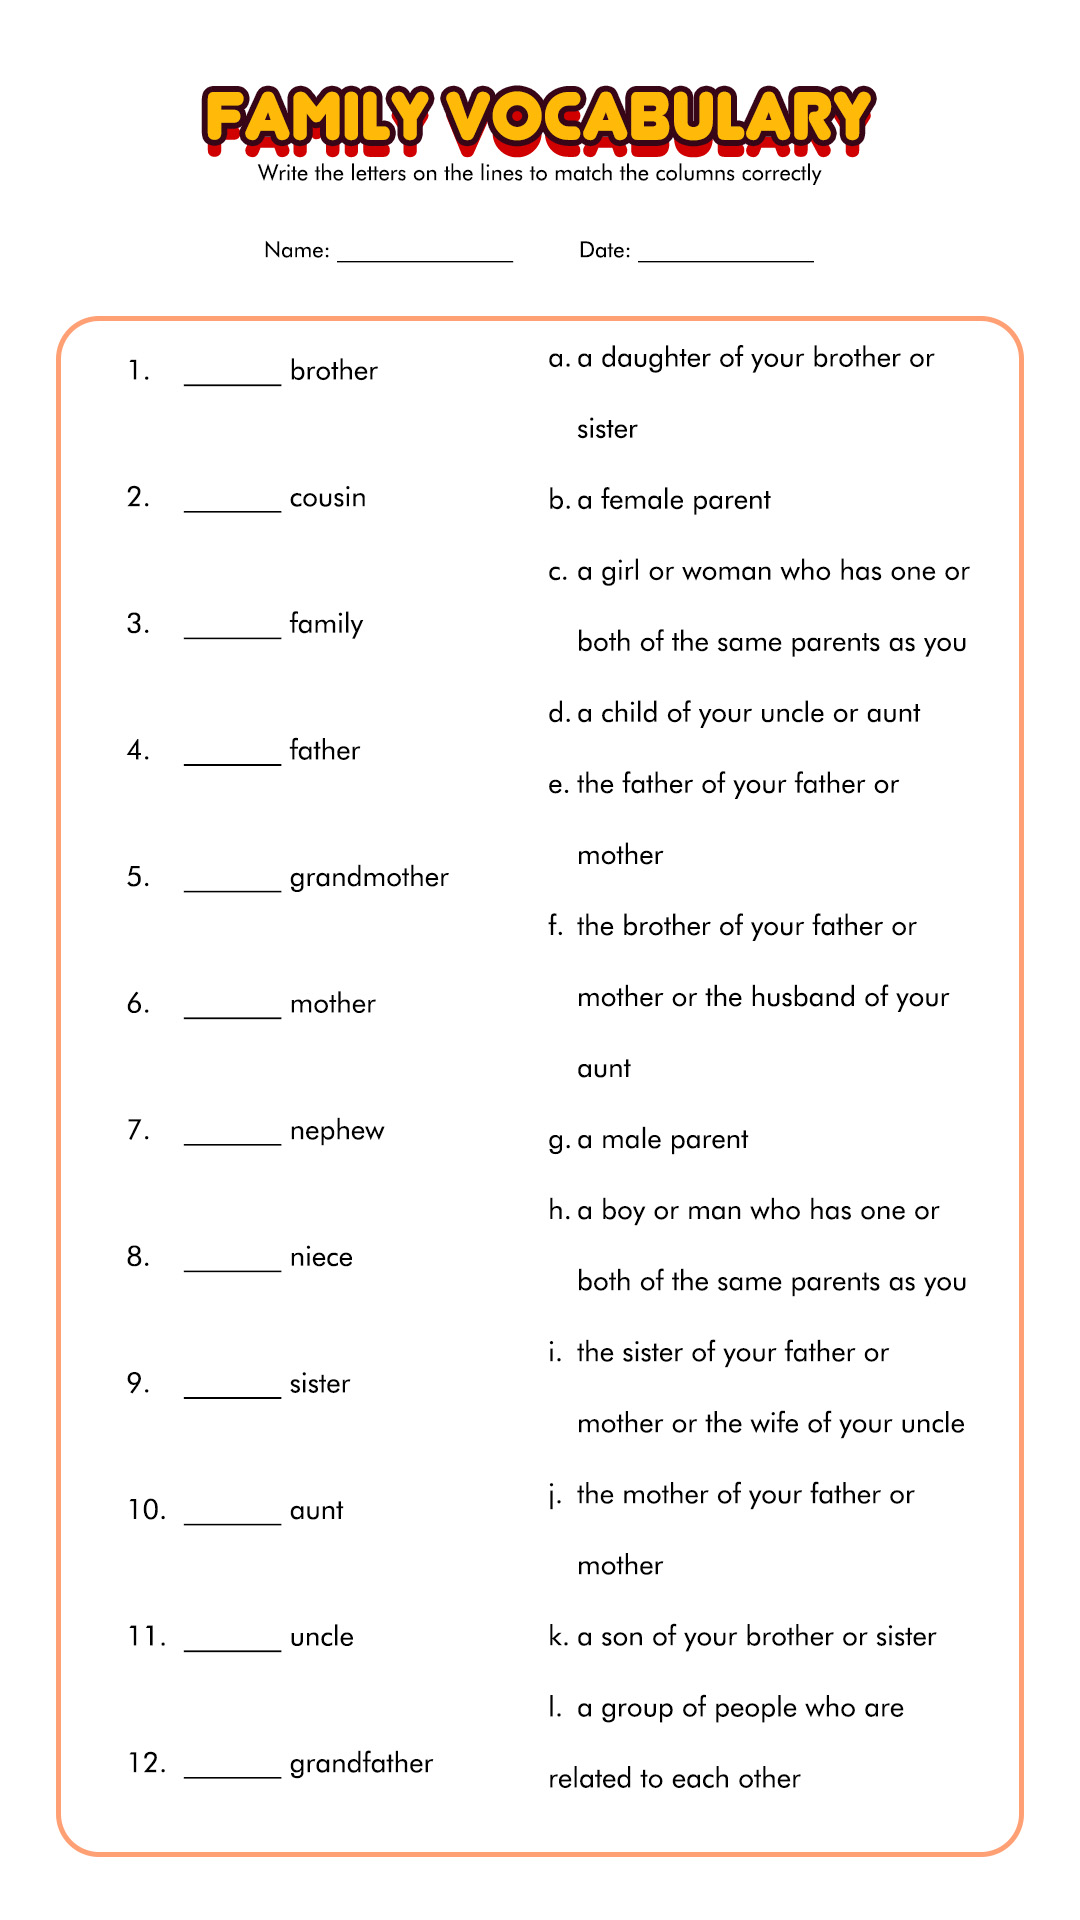 ESL Family Vocabulary Worksheets